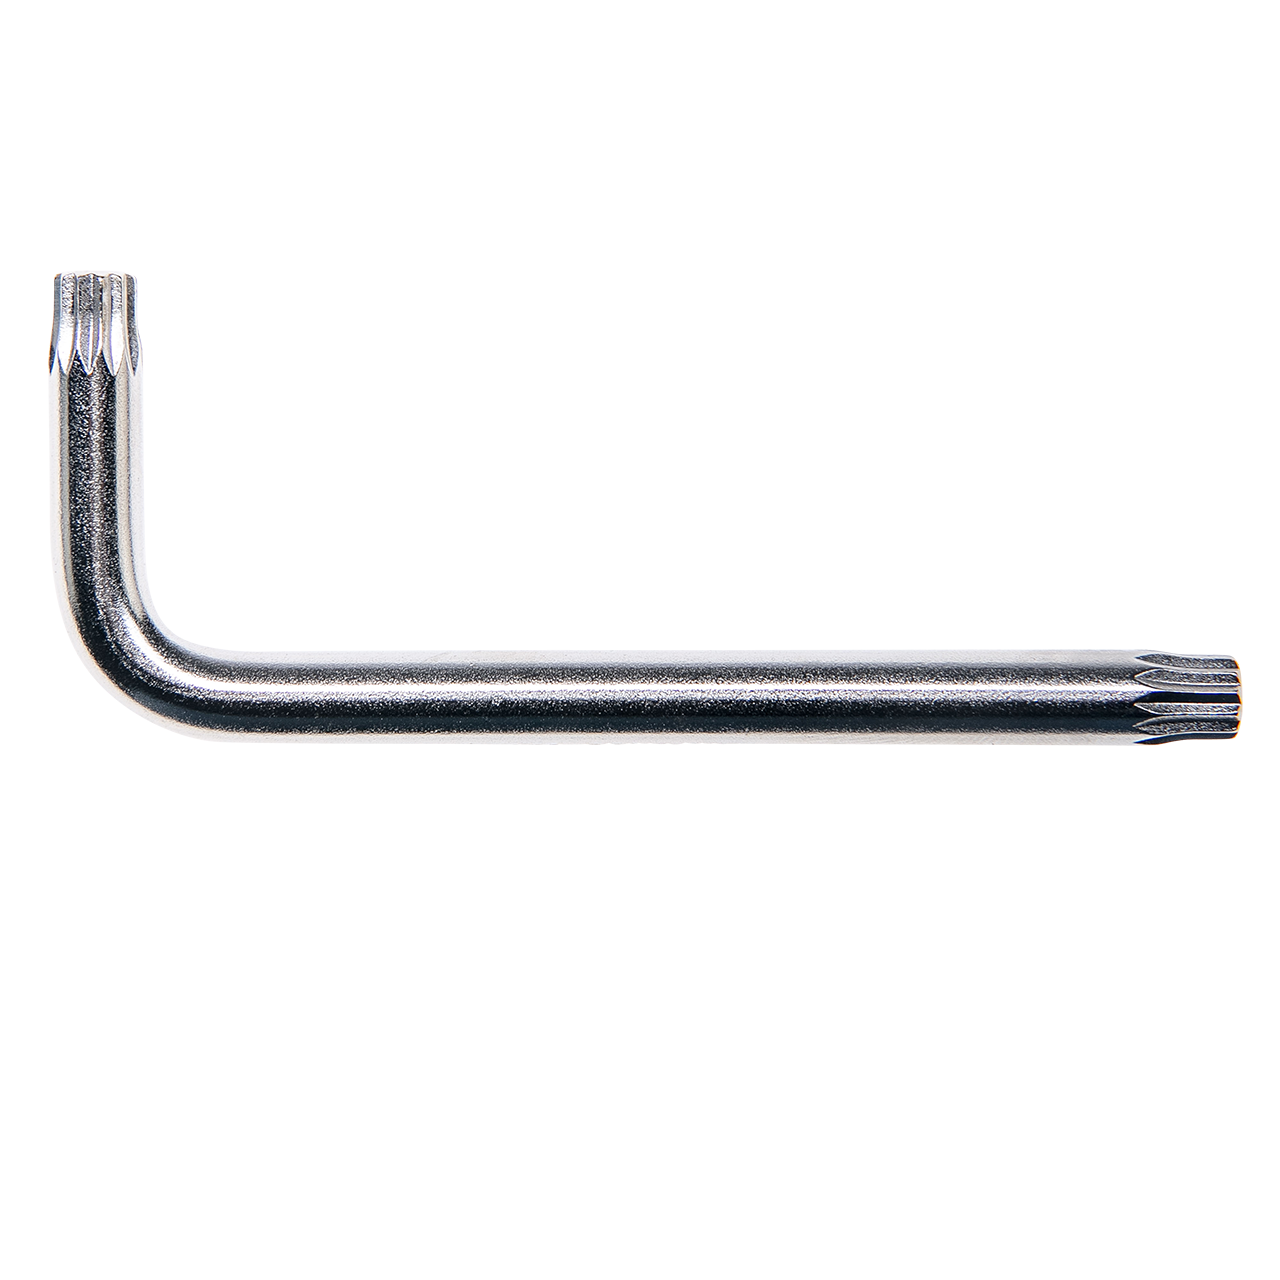 Multi-Spline Key Wrench, DIN 65253